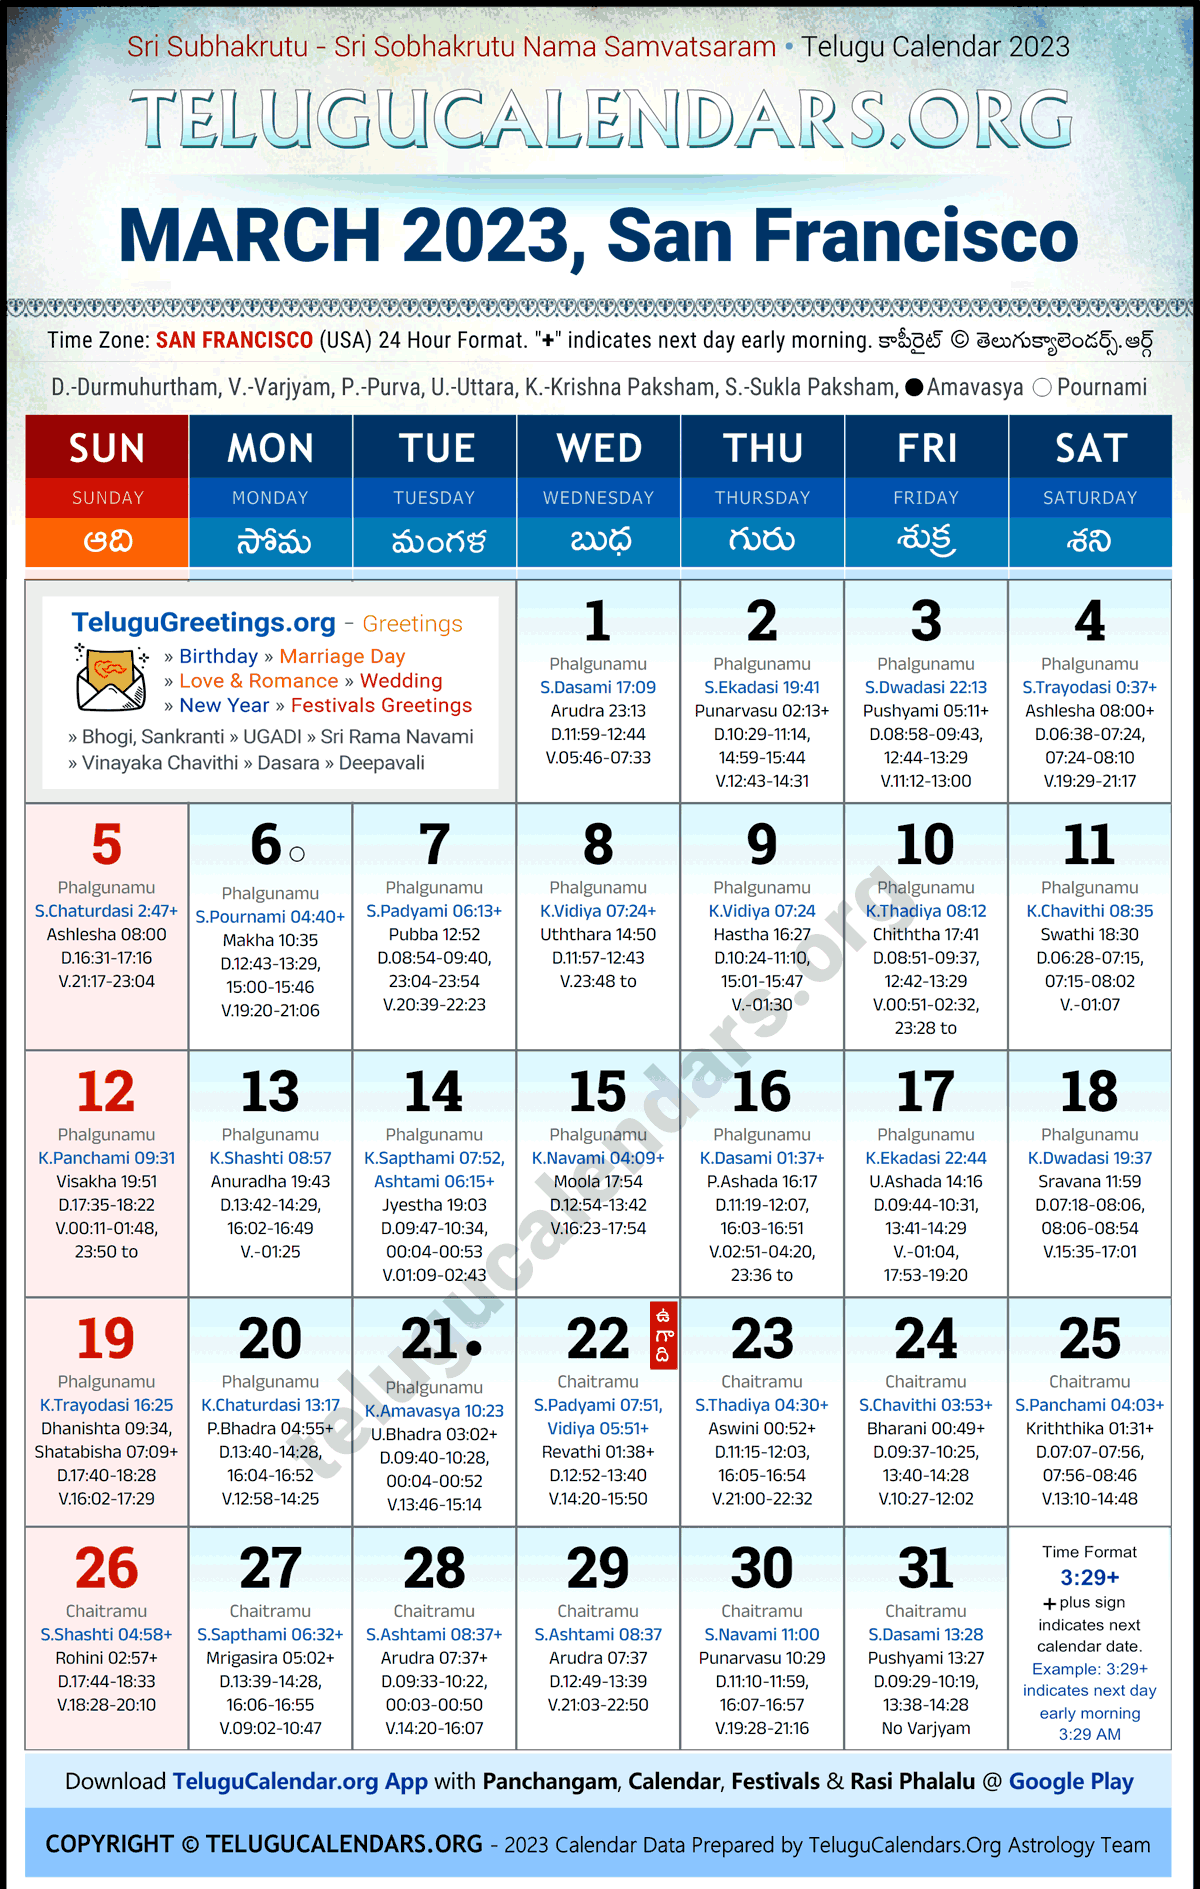 Telugu Calendar 2023 March Festivals for San Francisco